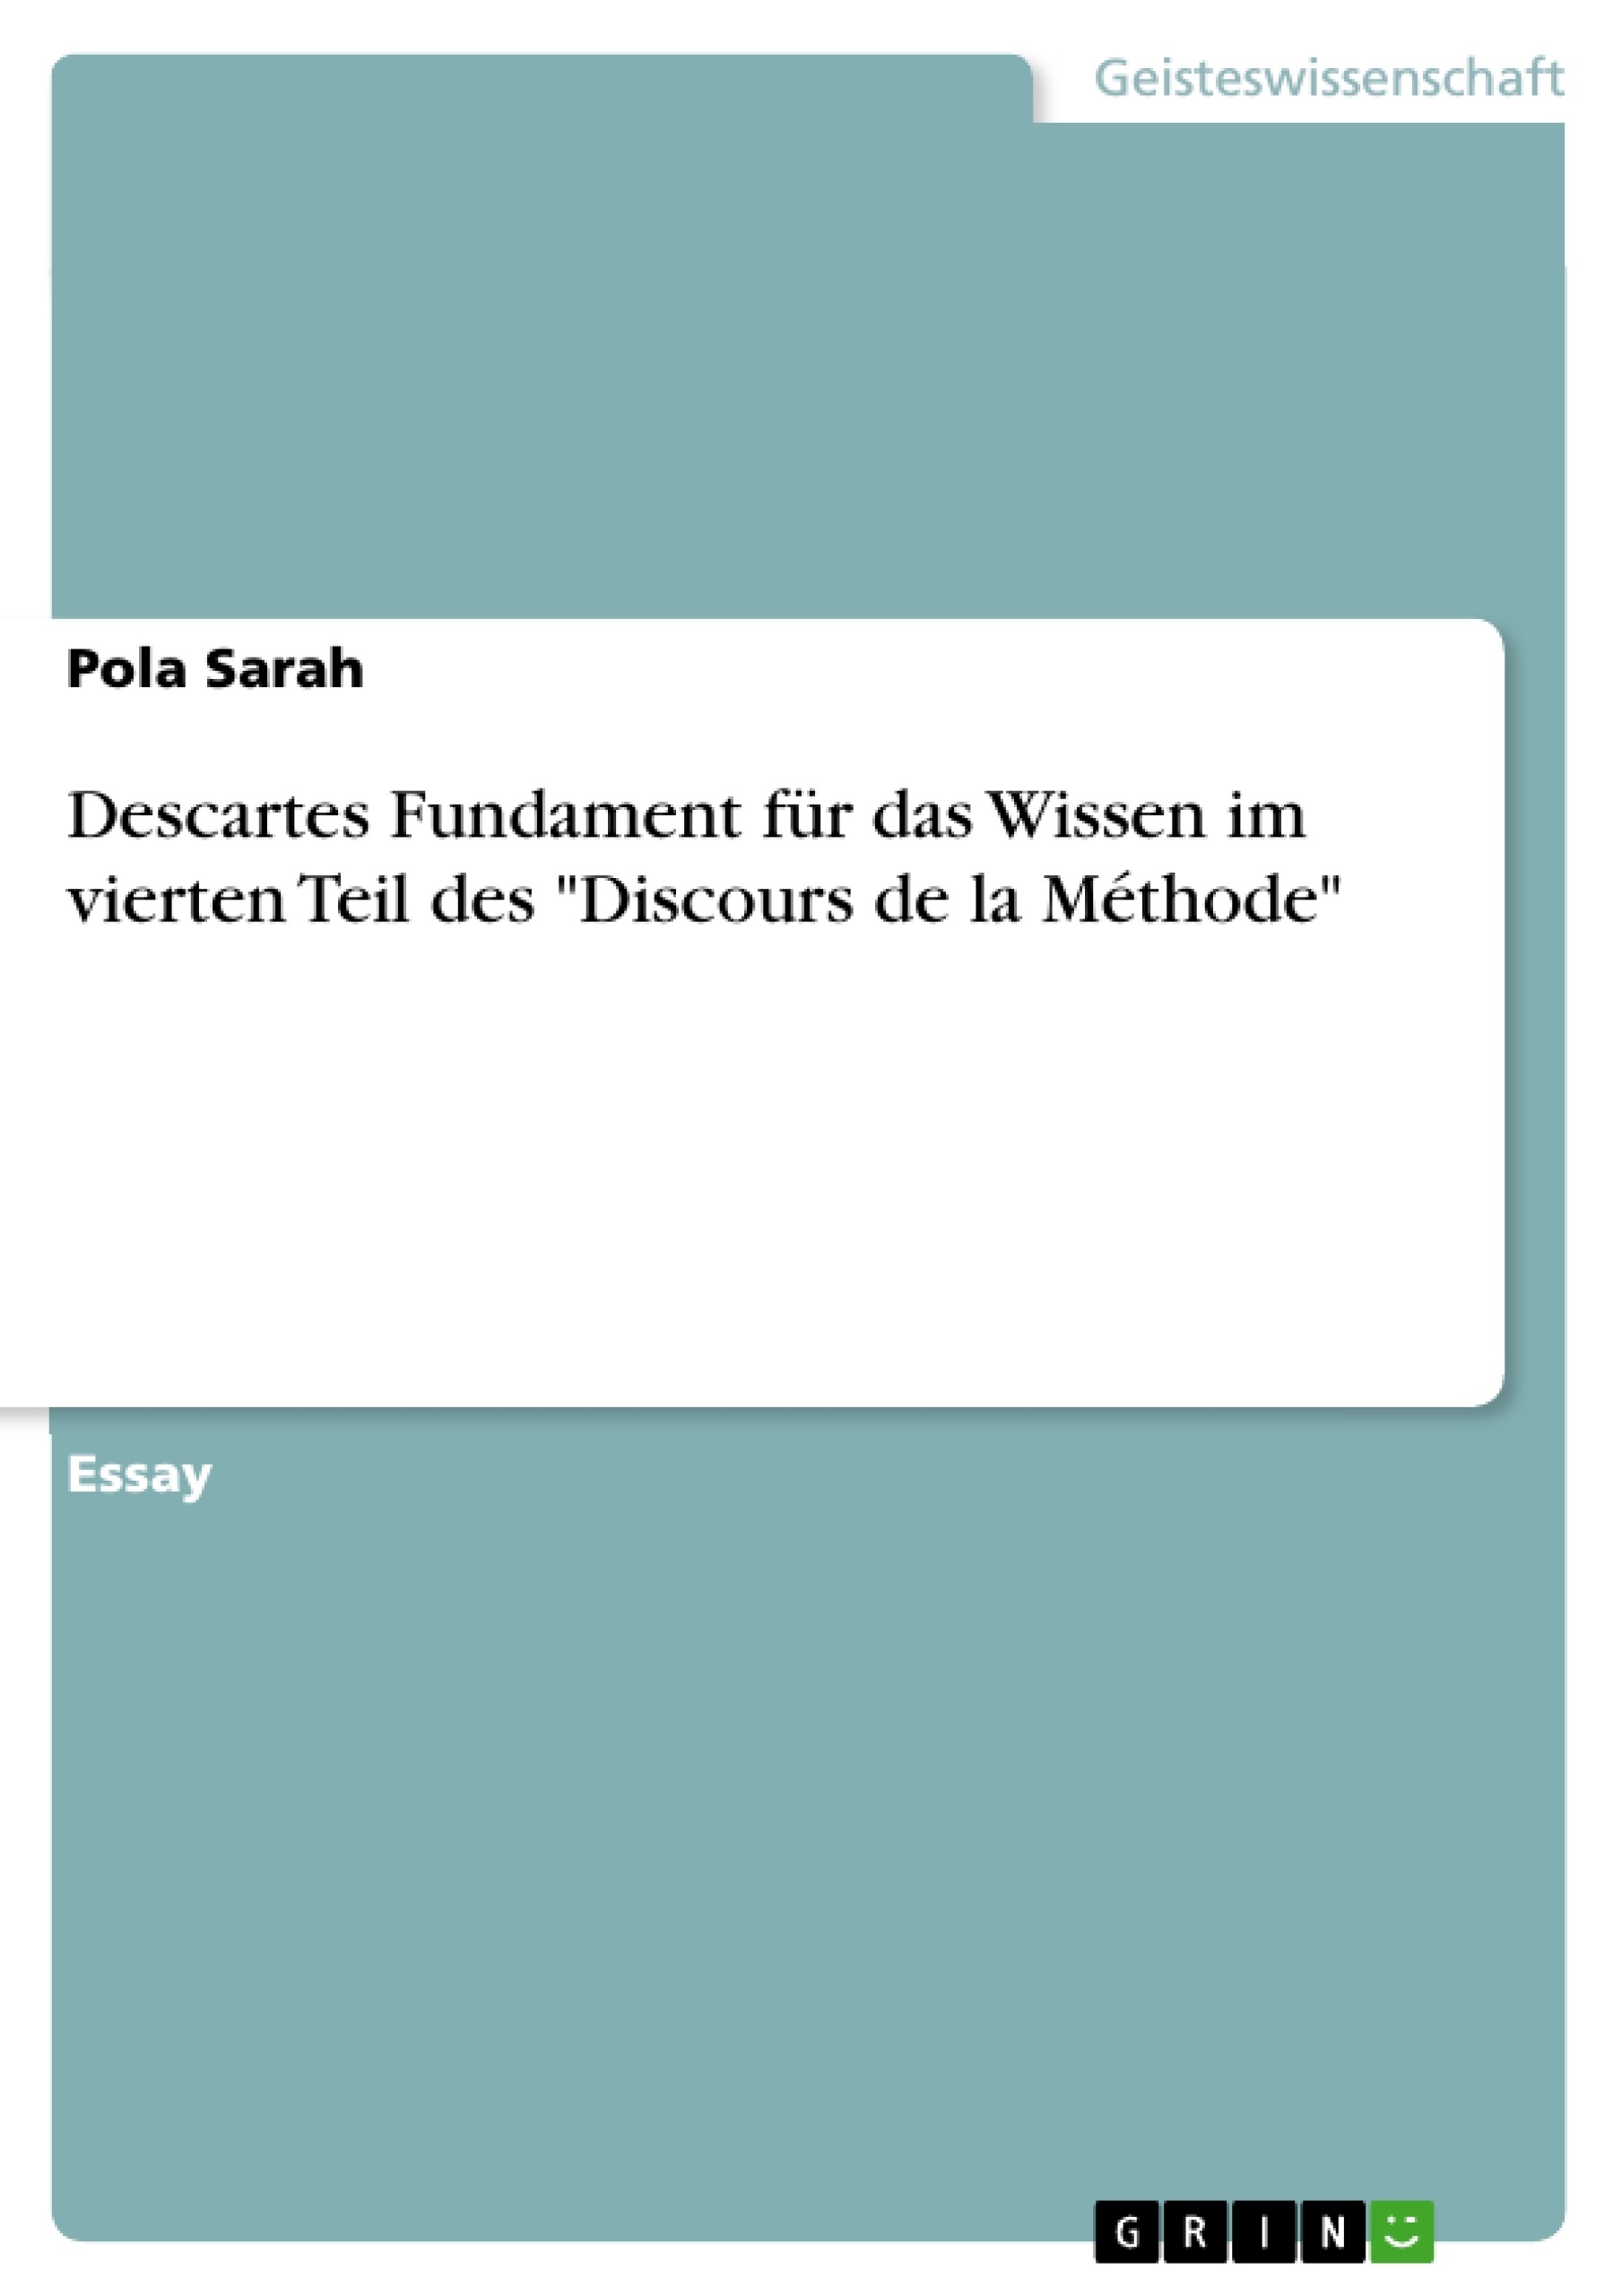 Title: Descartes Fundament für das Wissen im vierten Teil des "Discours de la Méthode"